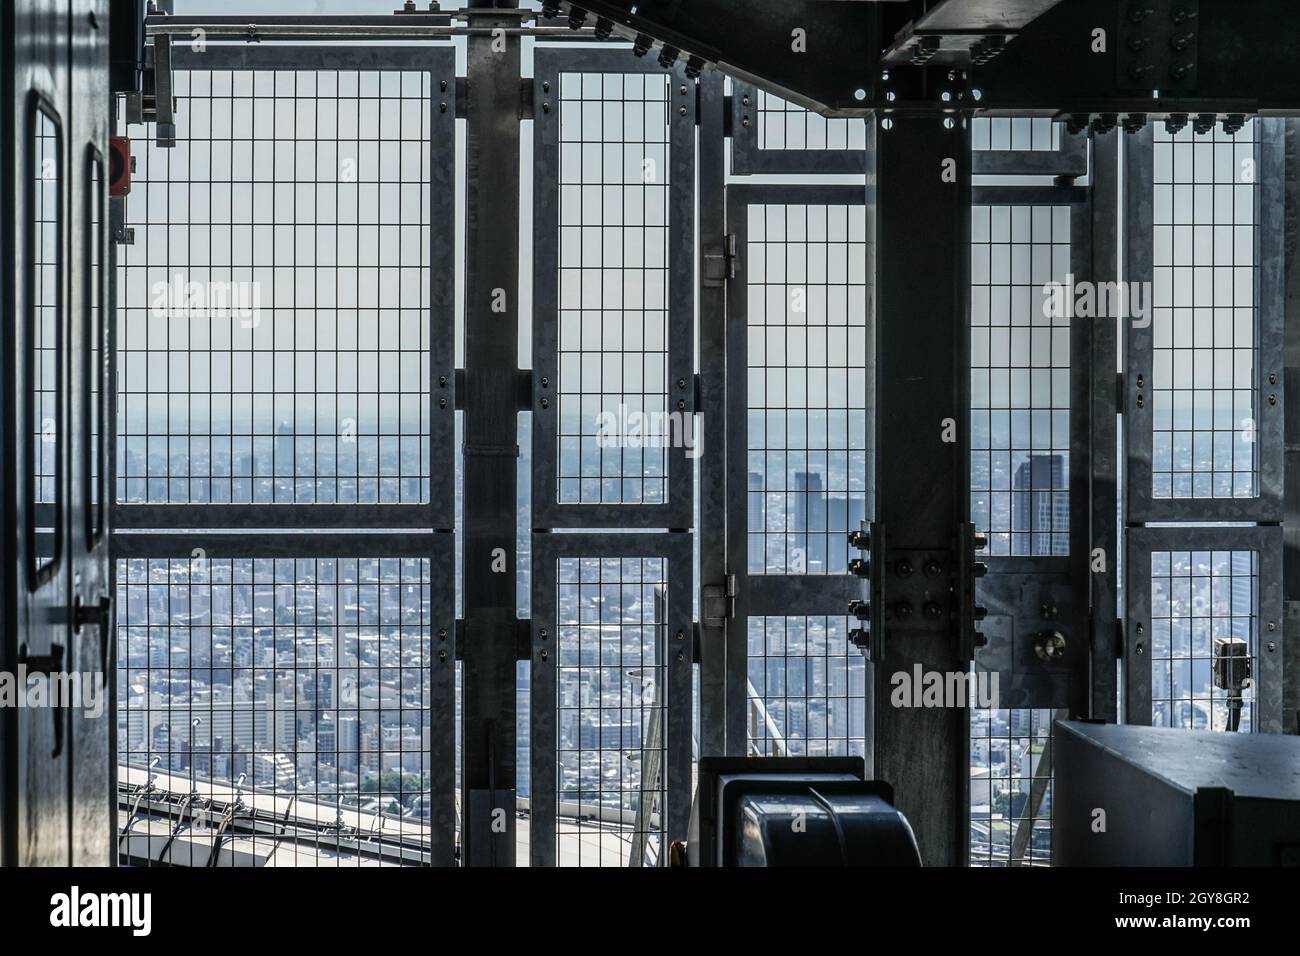 Of the machine room image. Shooting Location: Tokyo metropolitan area Stock Photo